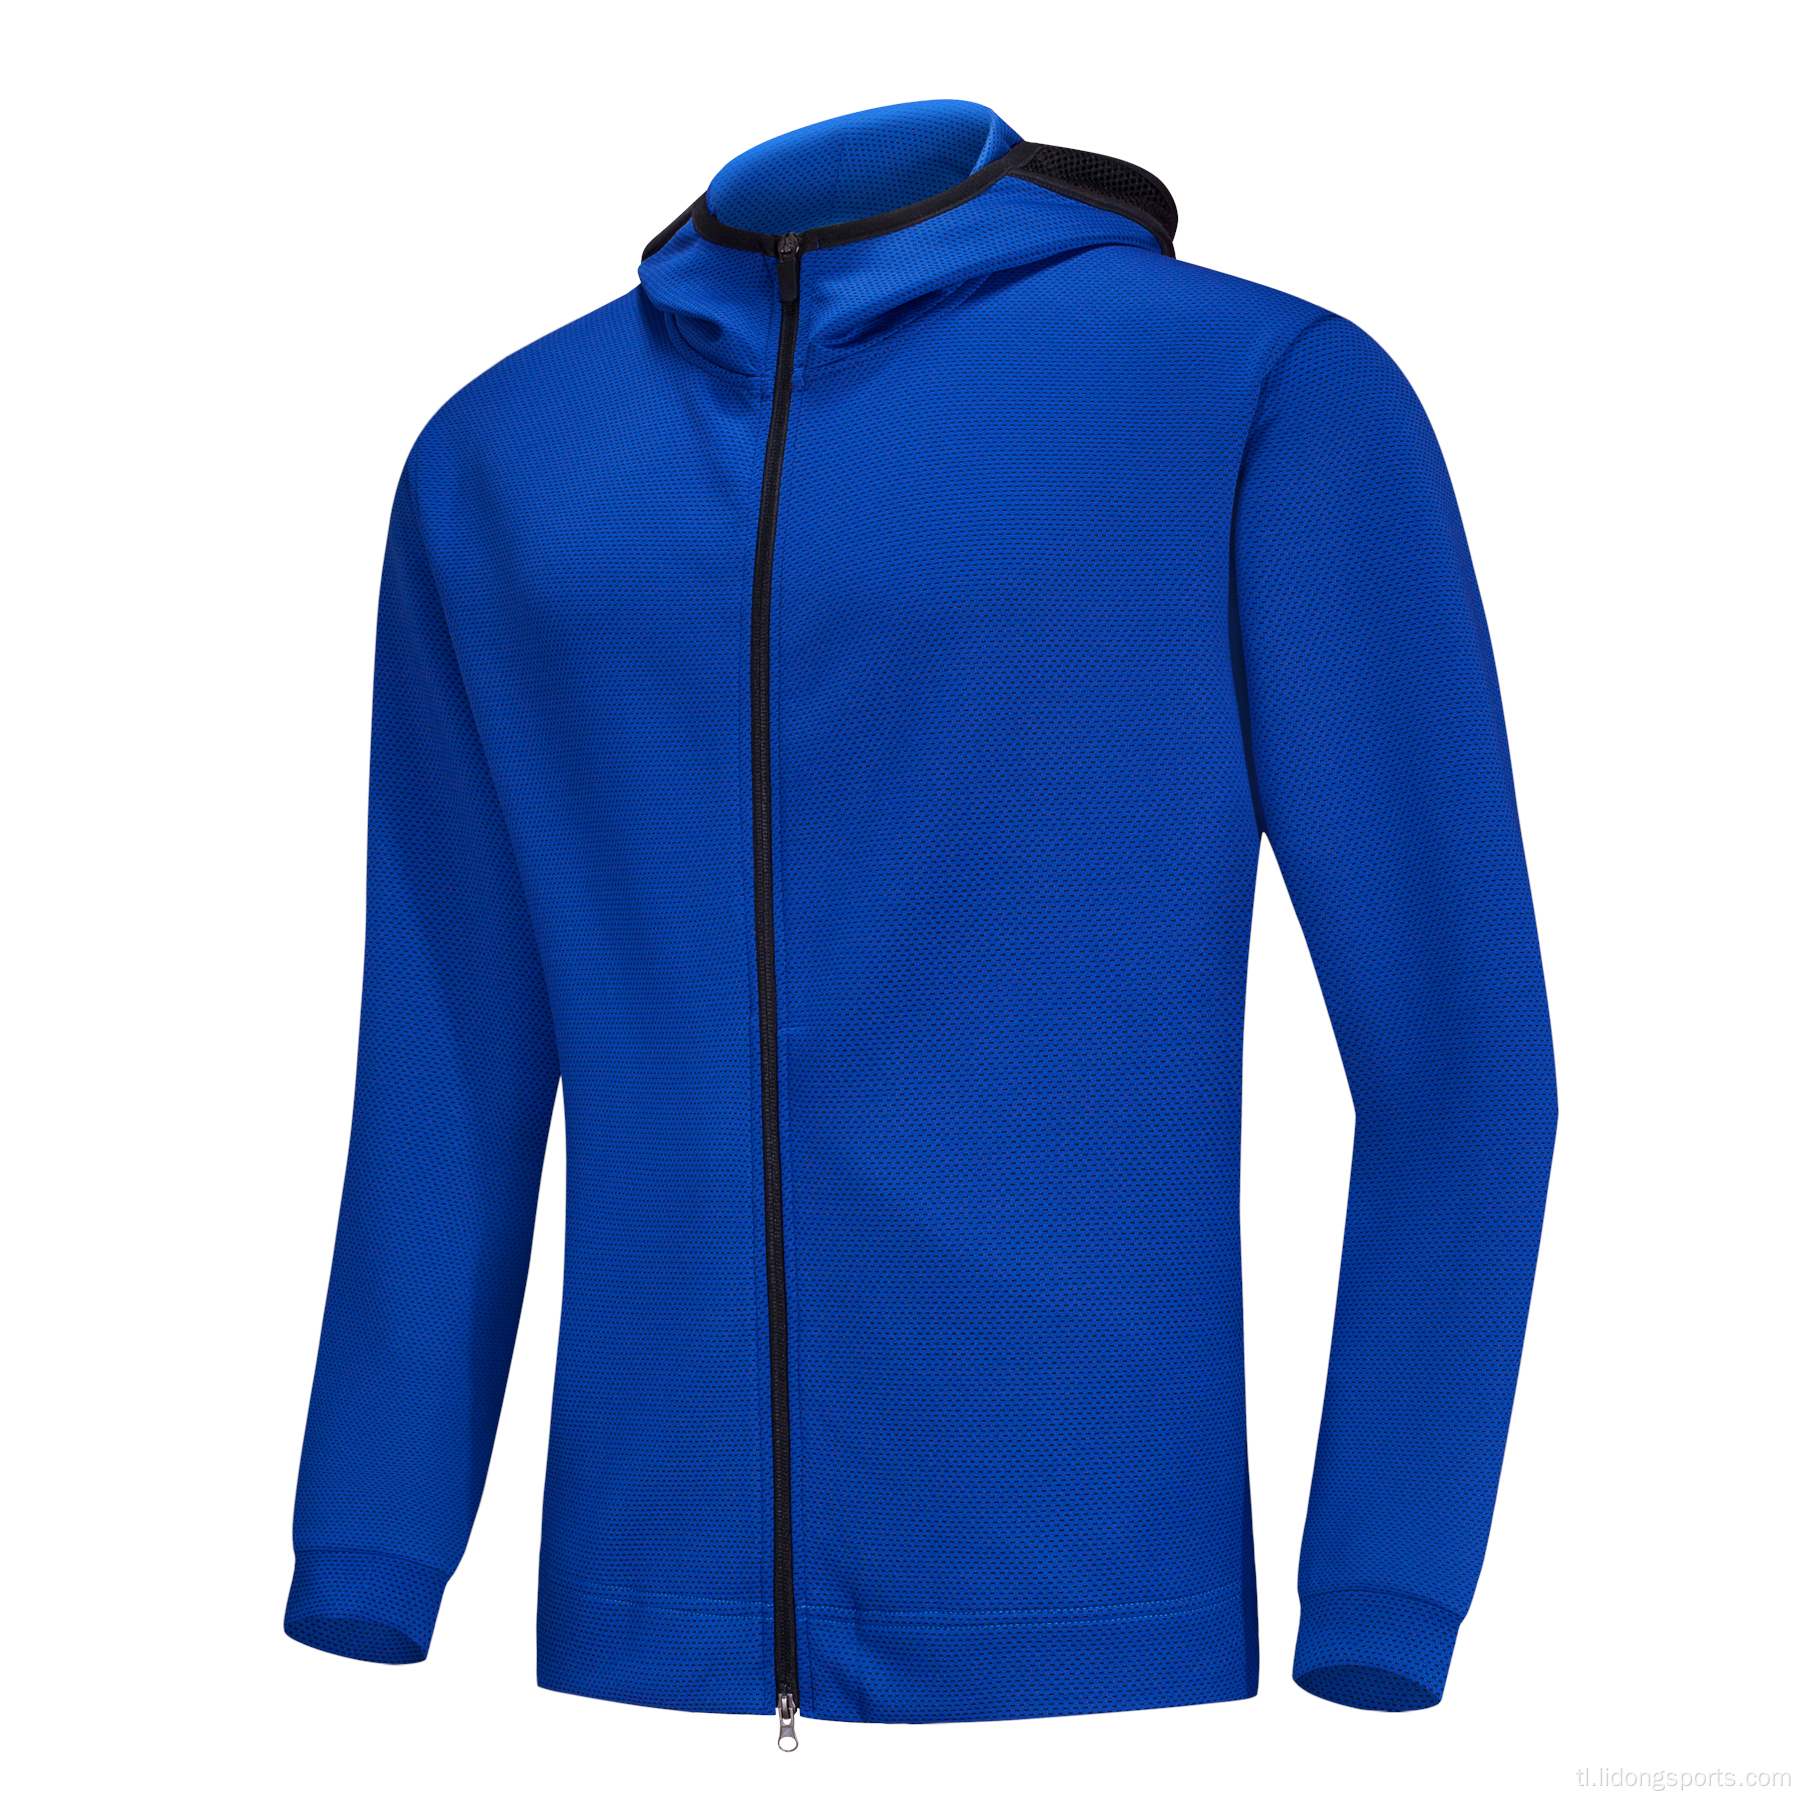 Lalaki kababaihan polyester hooded sport running jacket